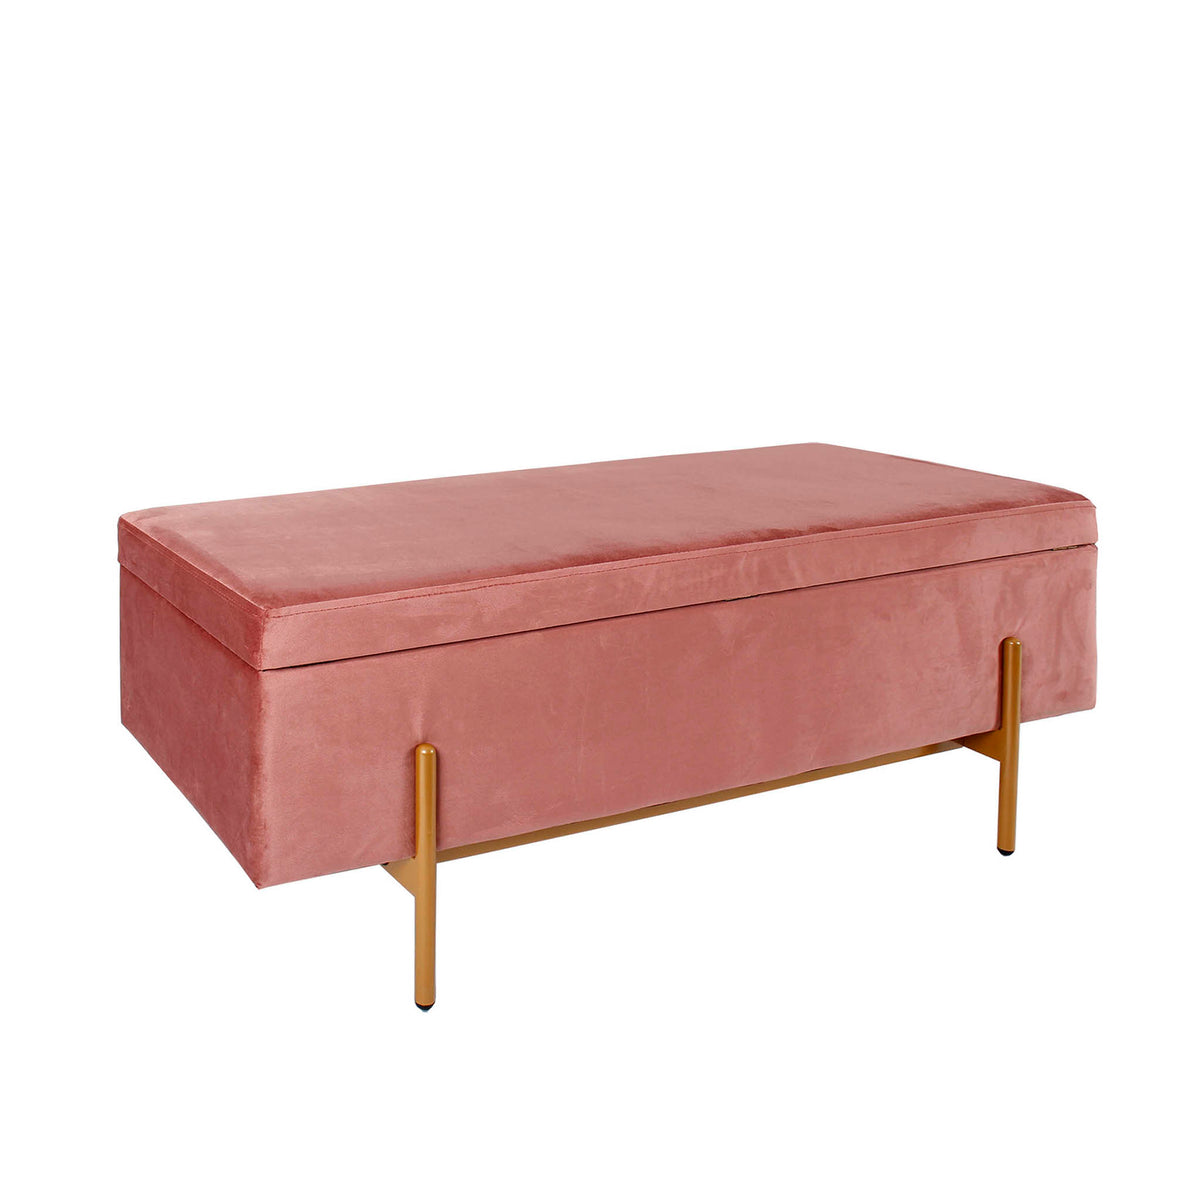 Edith Pink Velvet Ottoman Storage Box Footstool from Roseland